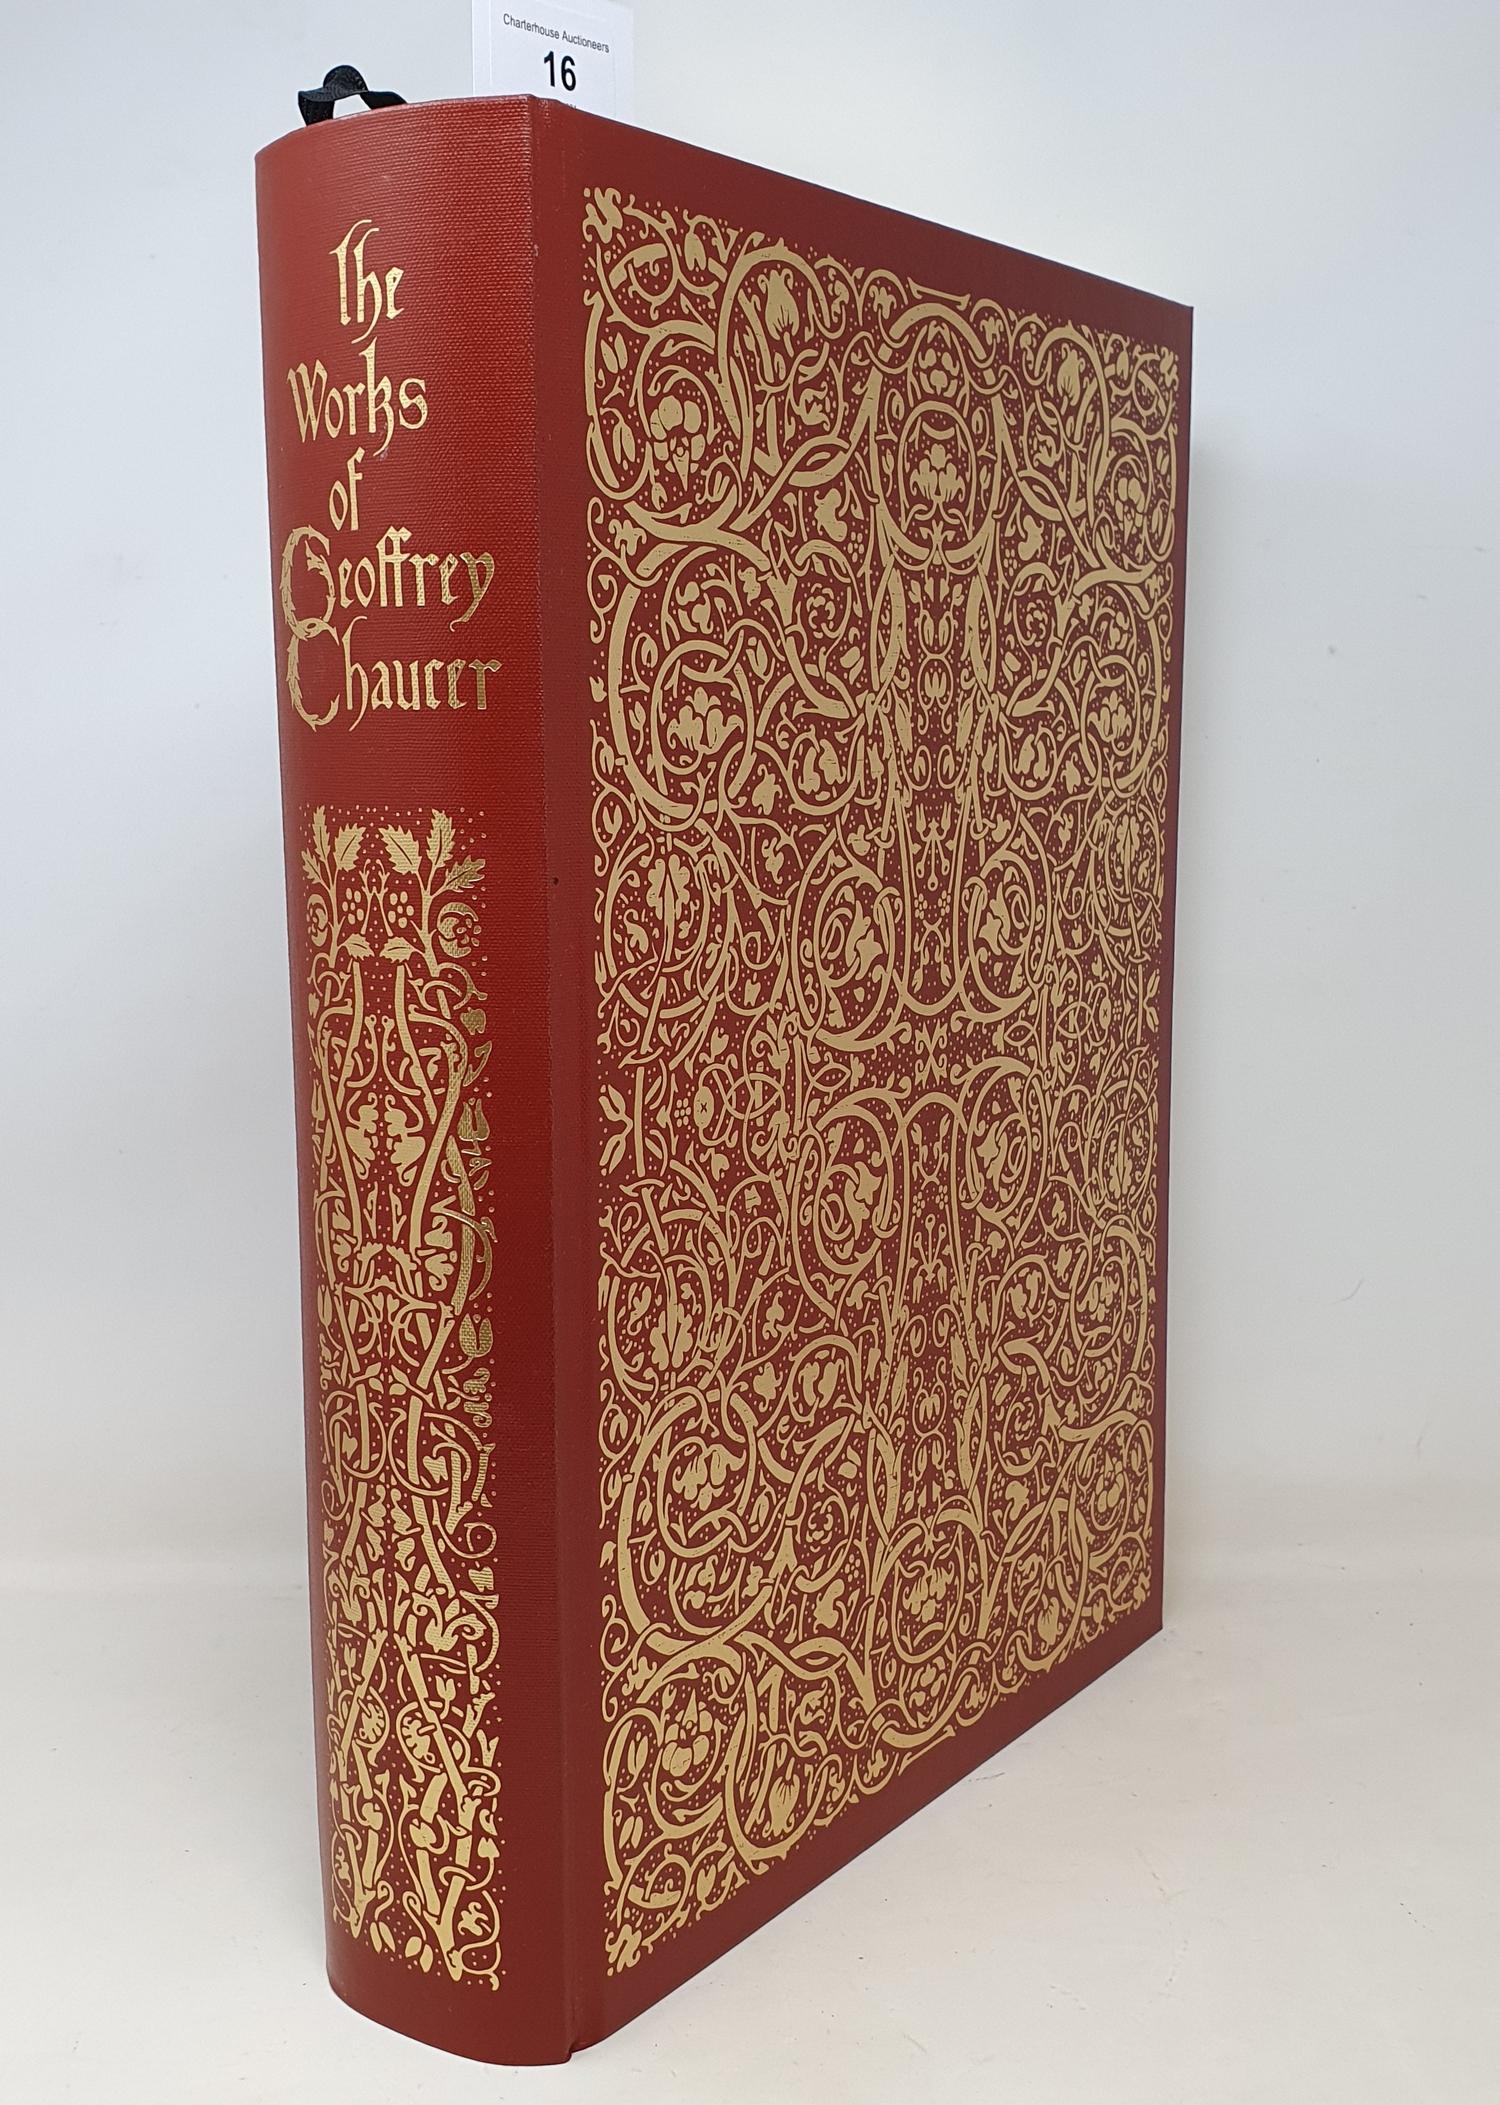 Chaucer (Geoffrey) Works of, Folio Society slipcase (lightly scuffed)